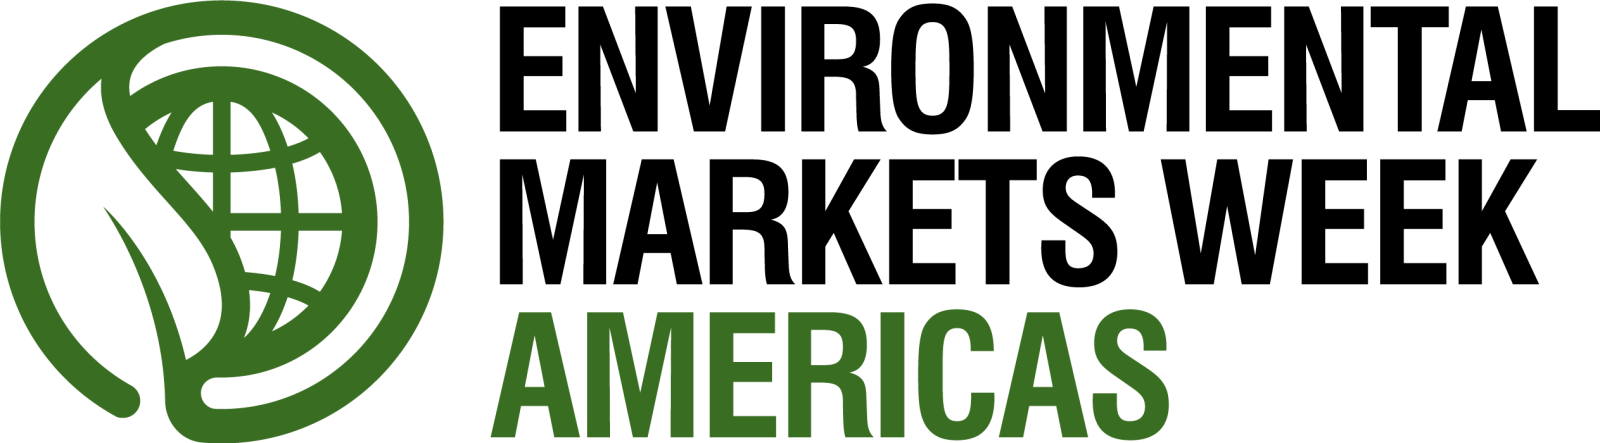 Environmental-Markets-Week_AMERICAS_pos